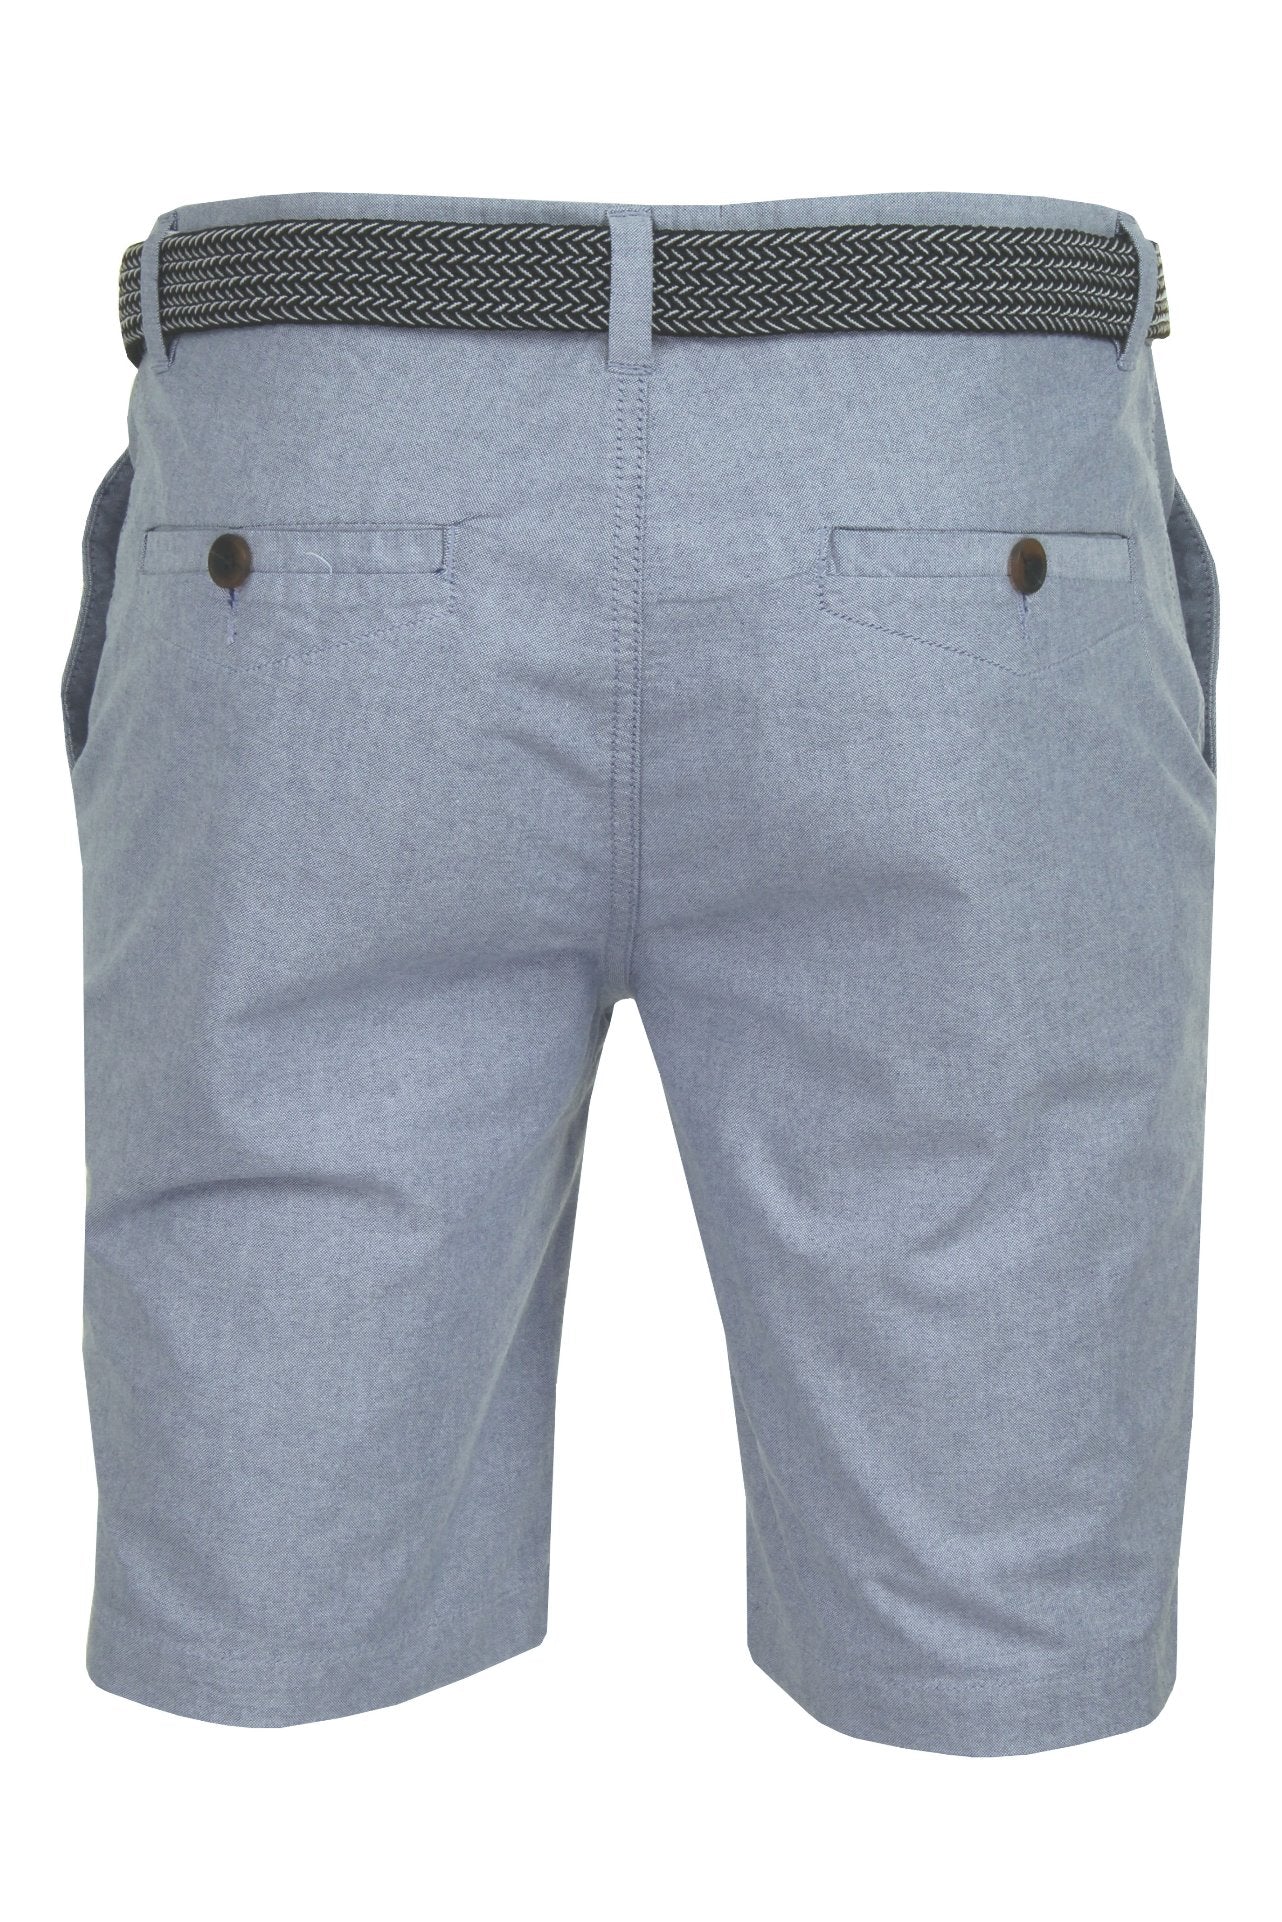 Xact Mens Oxford Chino Shorts with Belt-3